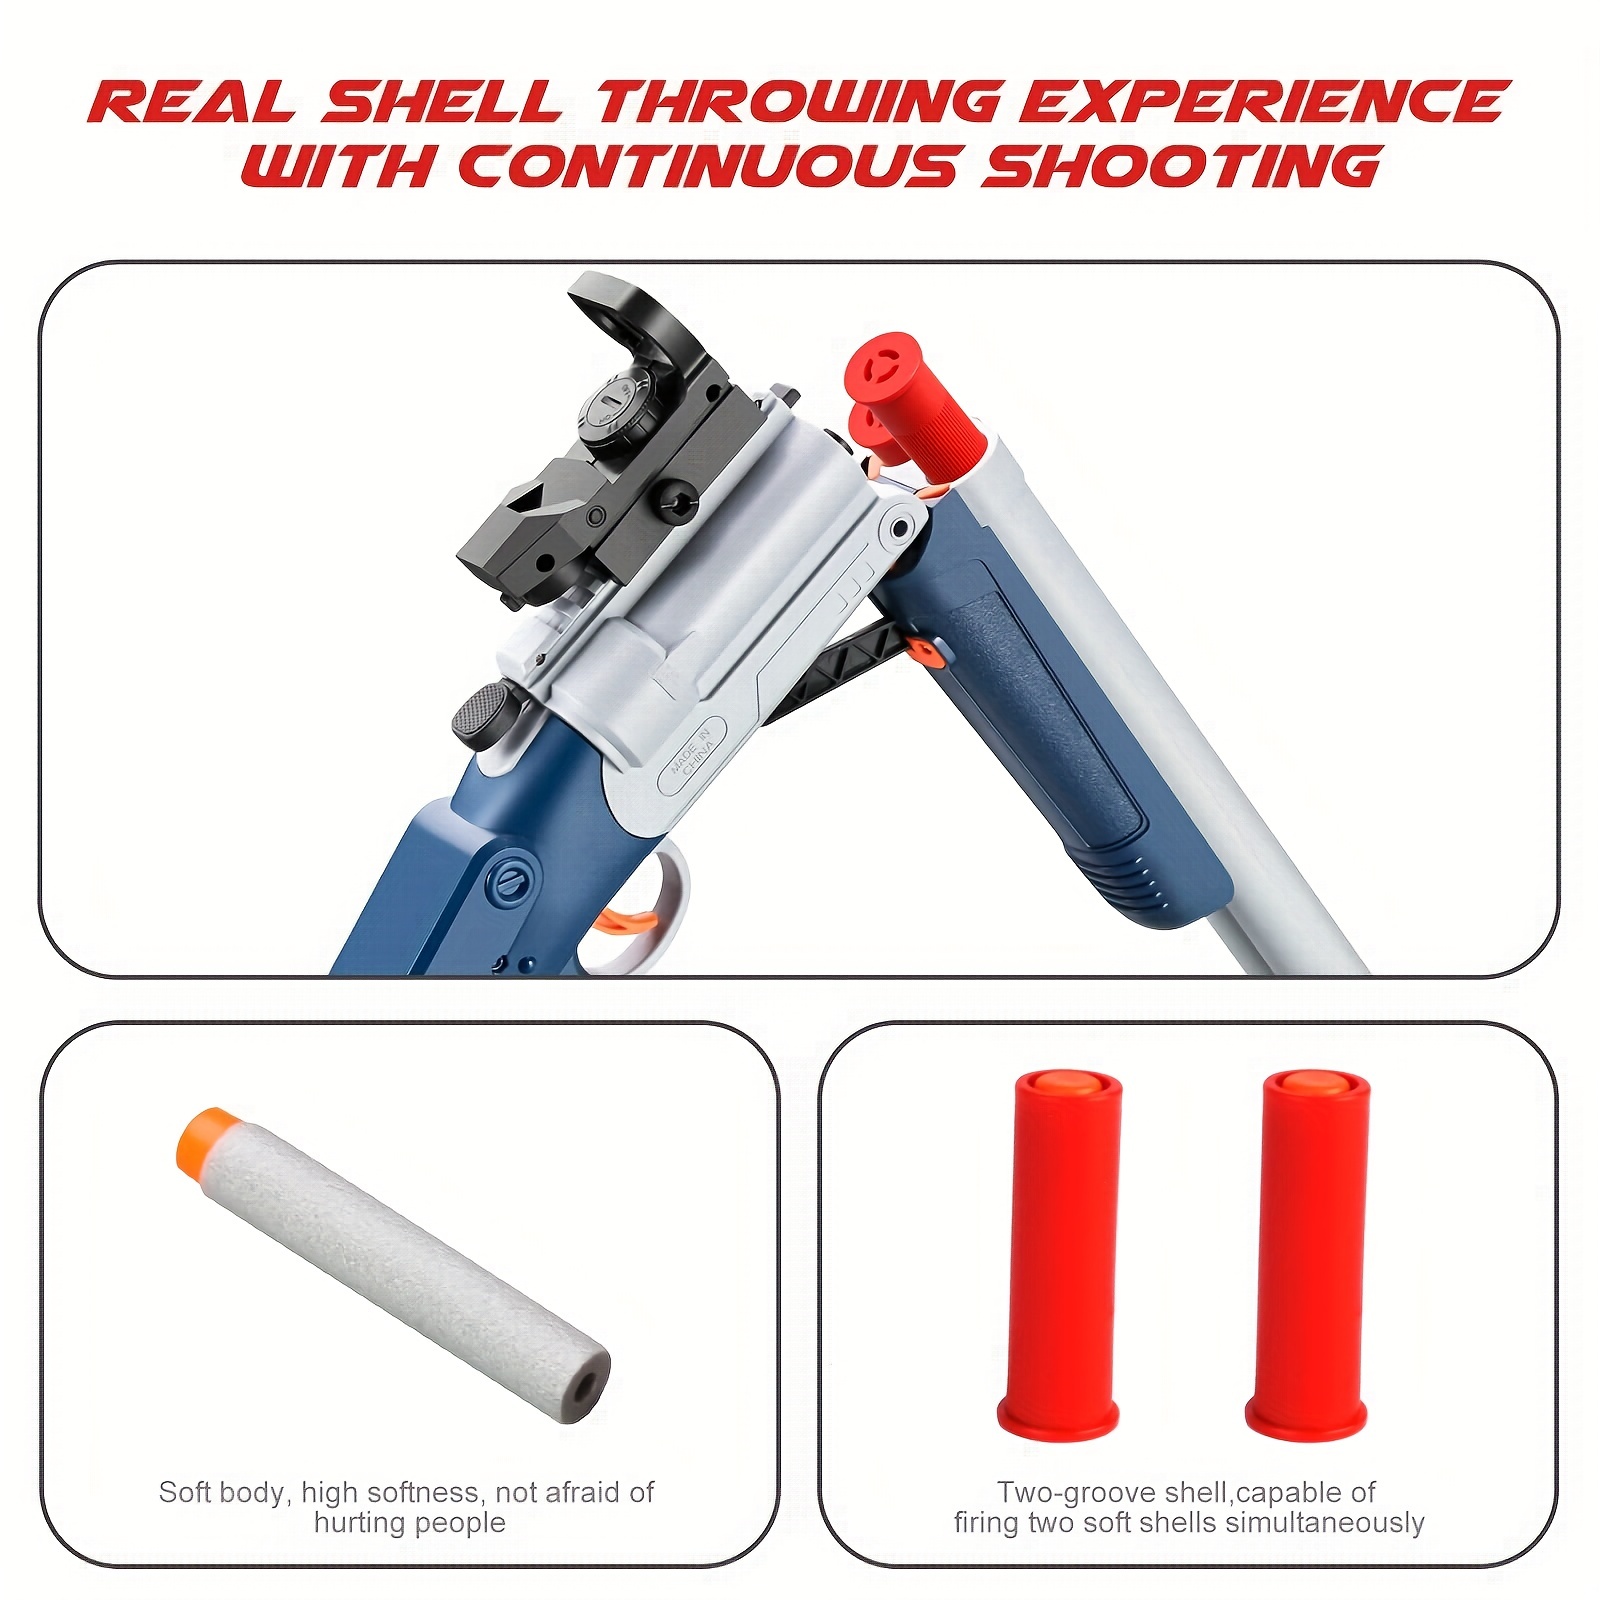 Double Barrel Shotgun Shell Ejecting Toy Nerf Gun Soft Bullet Toy